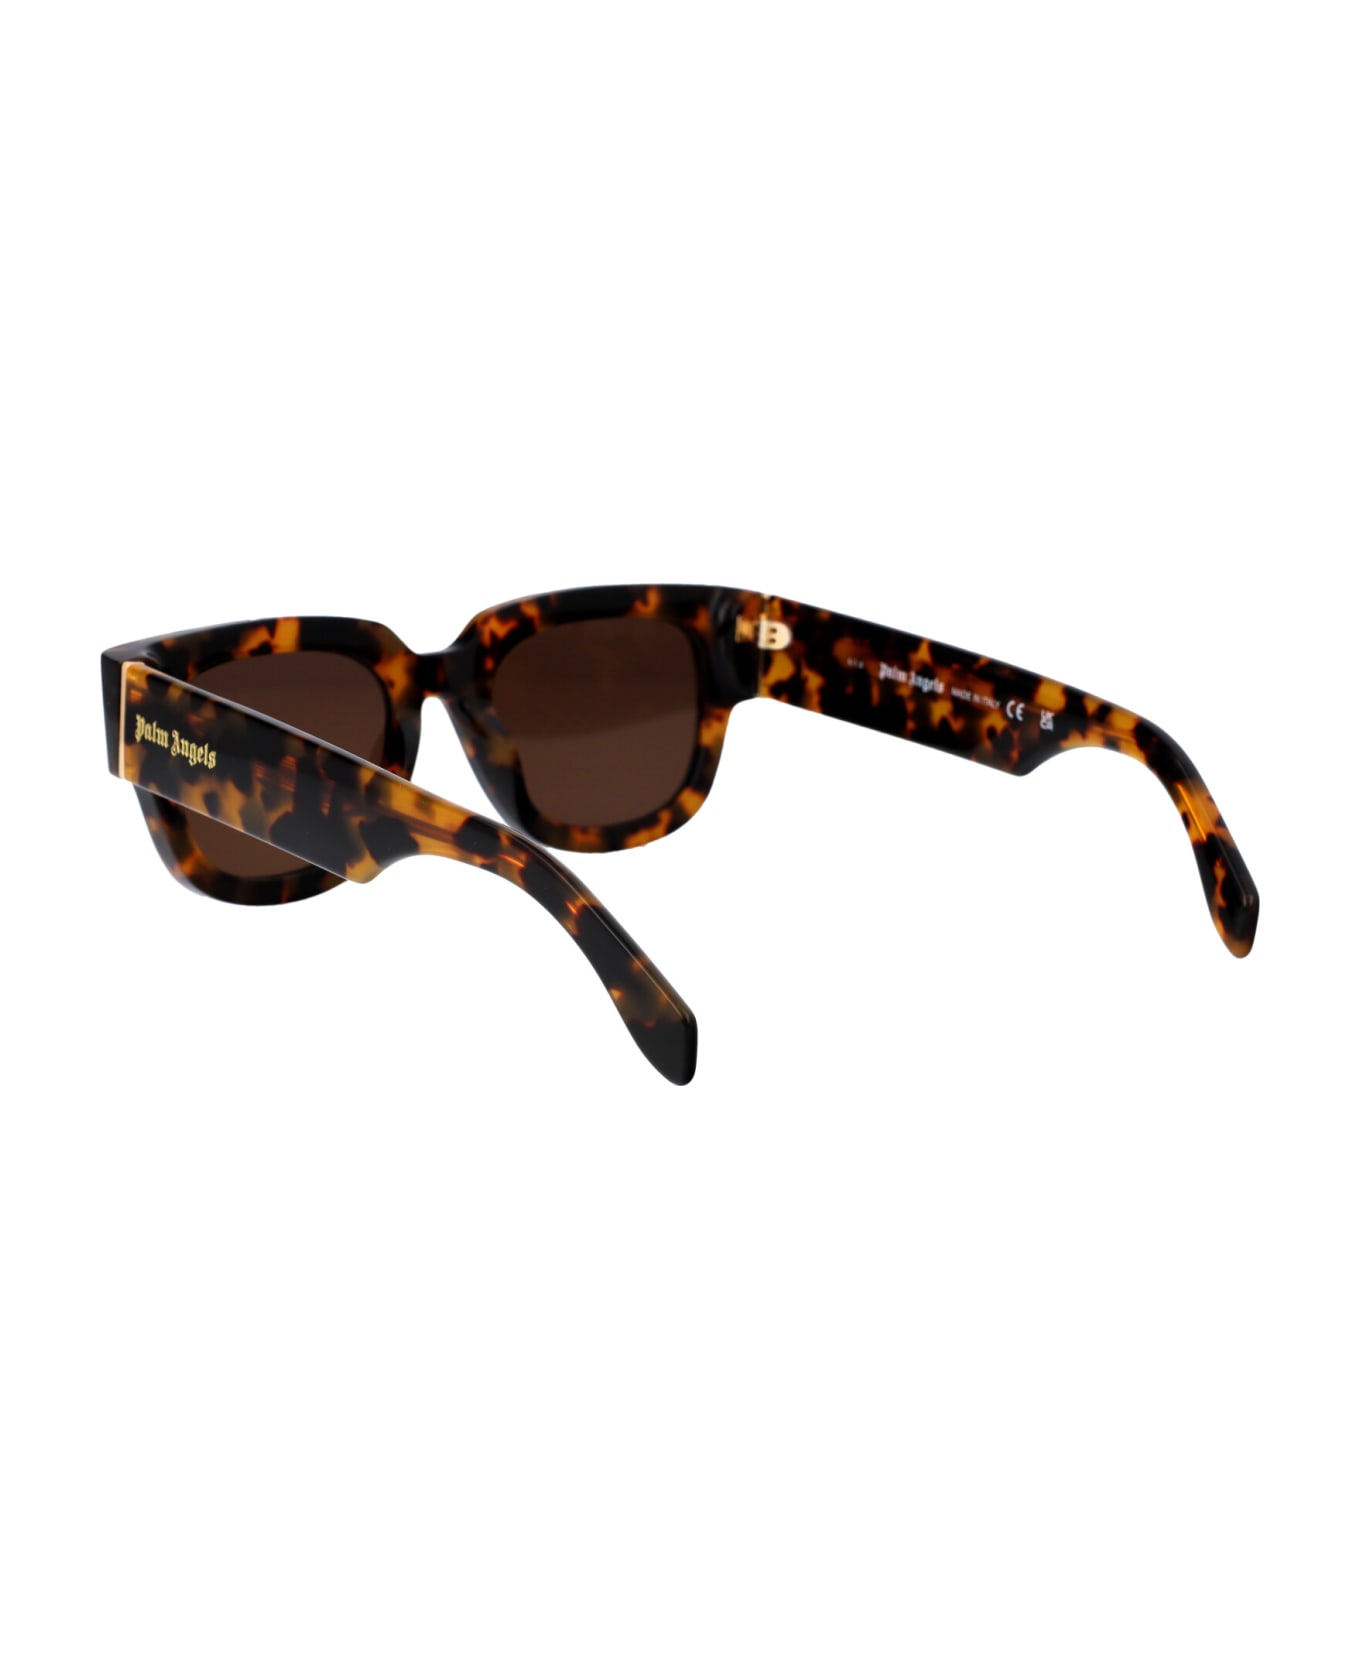 Palm Angels Monterey Sunglasses - 6064 HAVANA サングラス